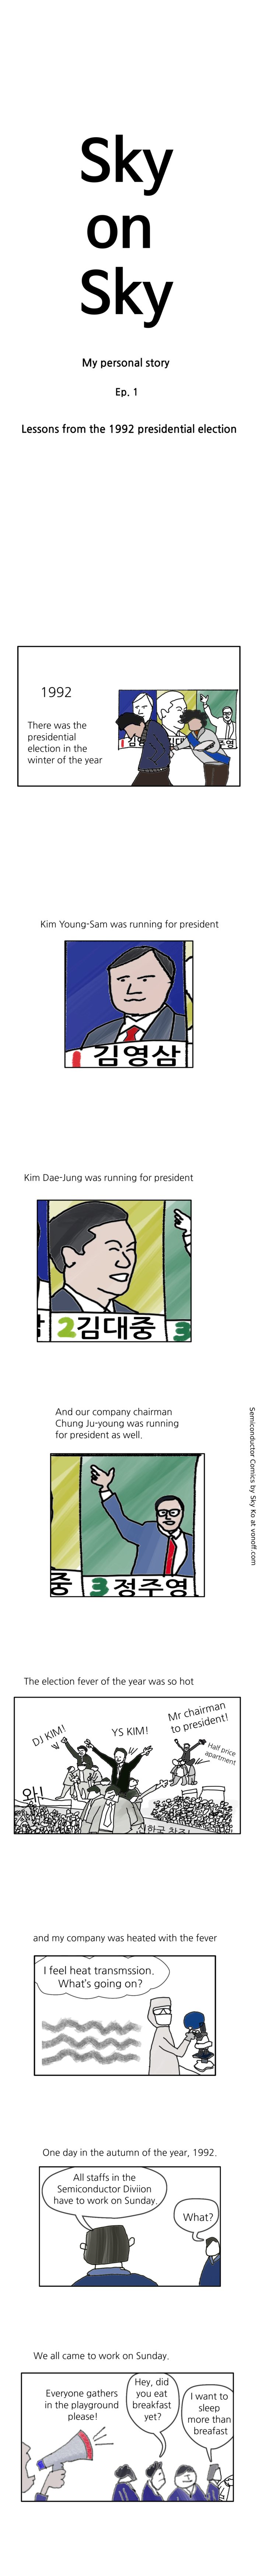 skyonsky Episode 1 - skyko life story comics - 1992 korea presidential election